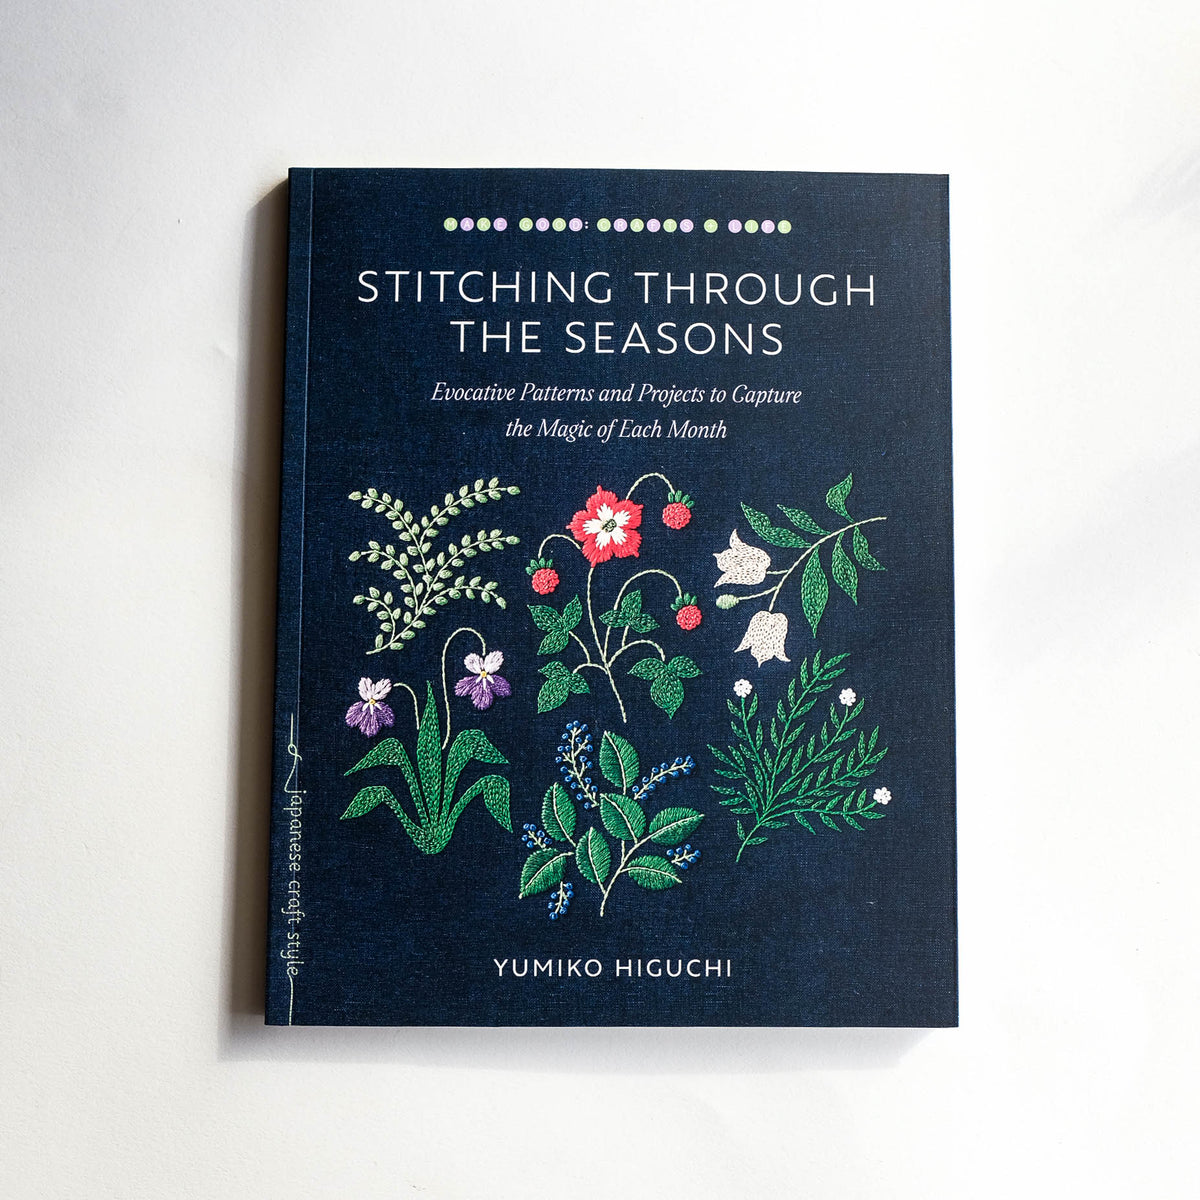 Stitching Through the Seasons by Yumiko Higuchi